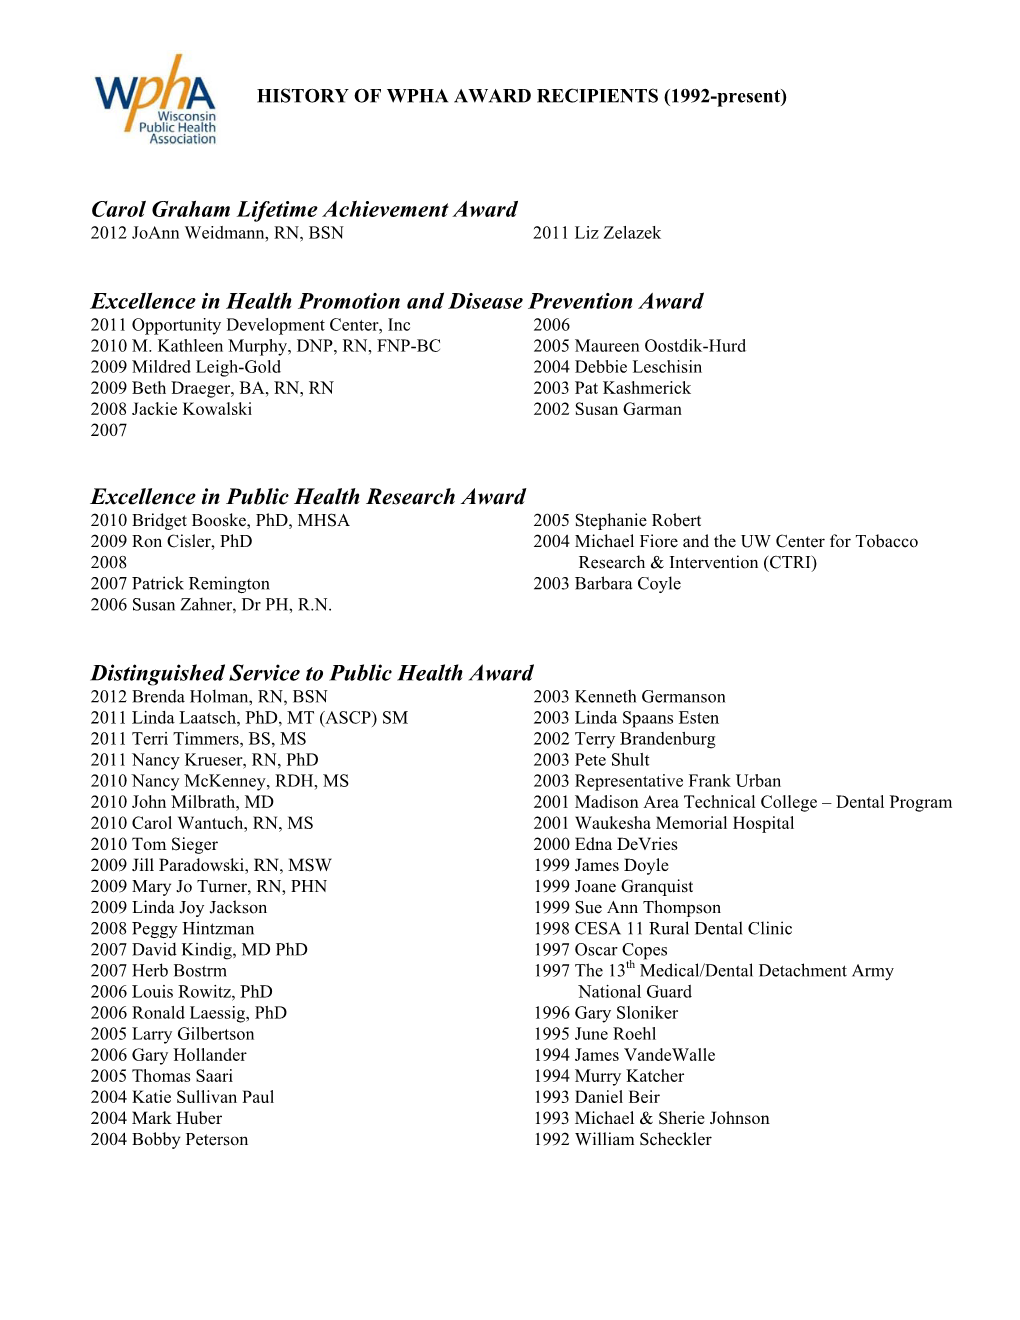 Carol Graham Lifetime Achievement Award Excellence in Health